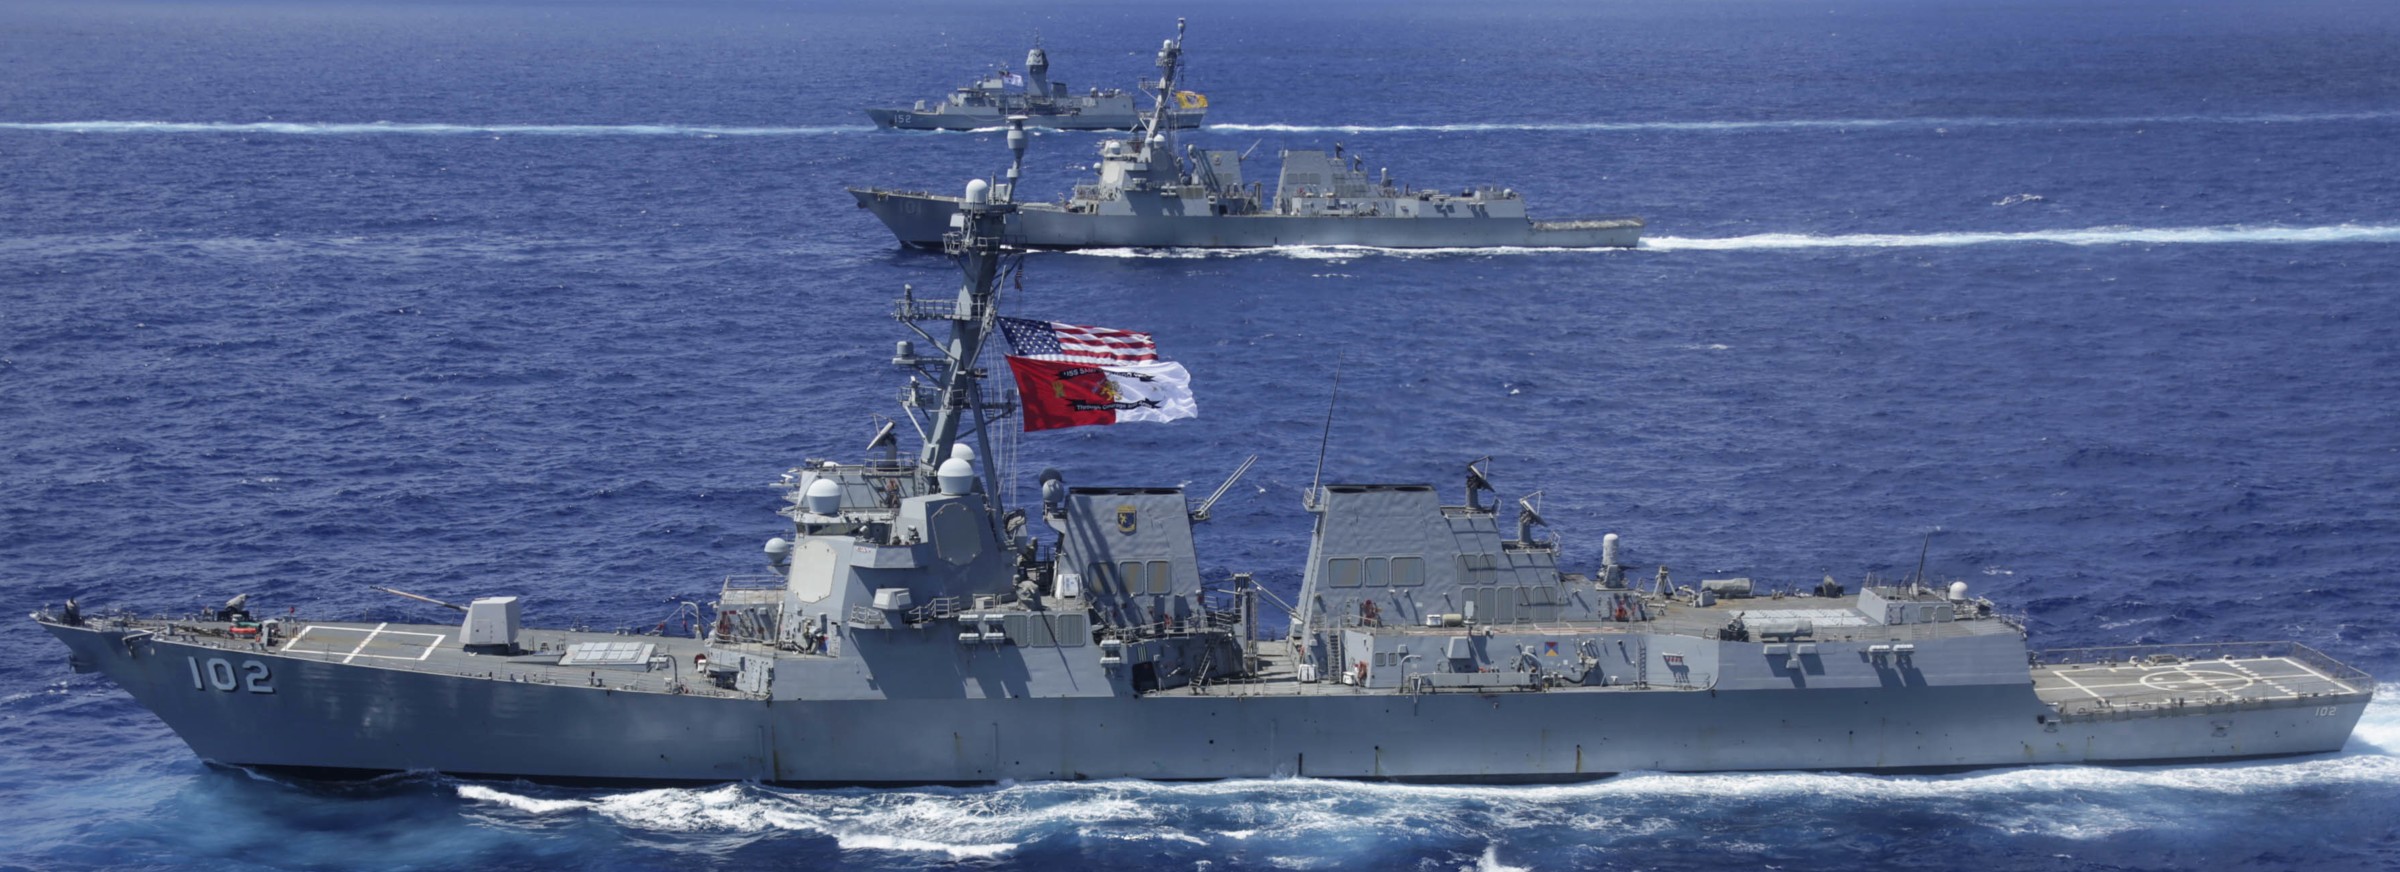 ddg-102 uss sampson arleigh burke class guided missile destroyer aegis us navy pacific ocean 97